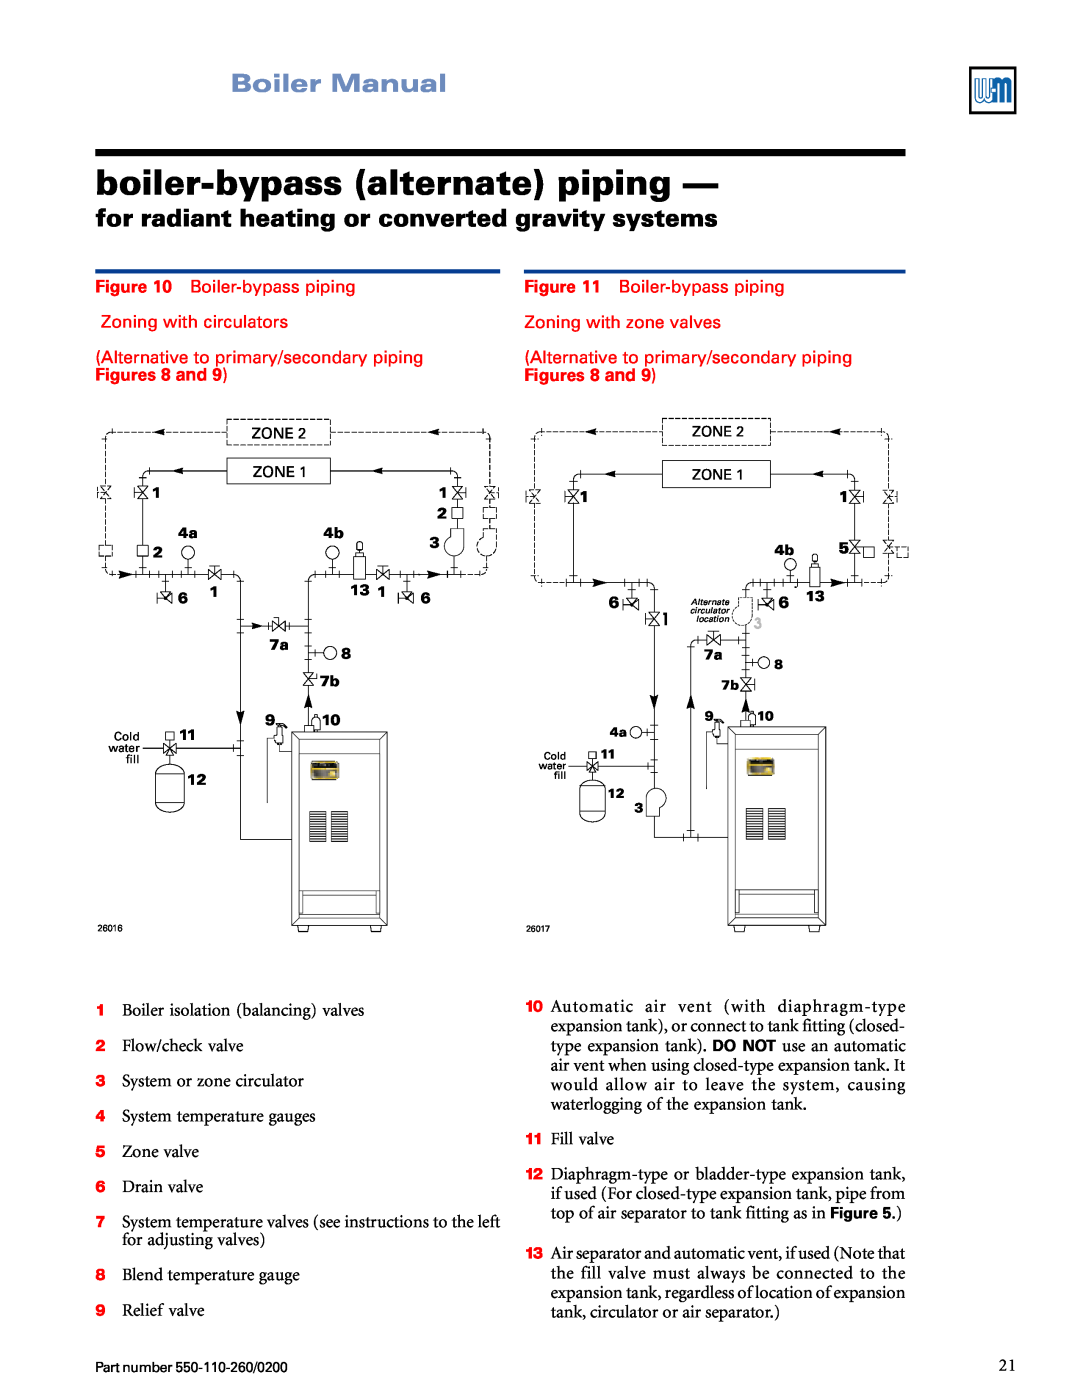 Weil-McLain 550-110-260/02002 boiler-bypassalternate piping, Boiler Manual, Boiler-bypasspiping, Zoning with circulators 